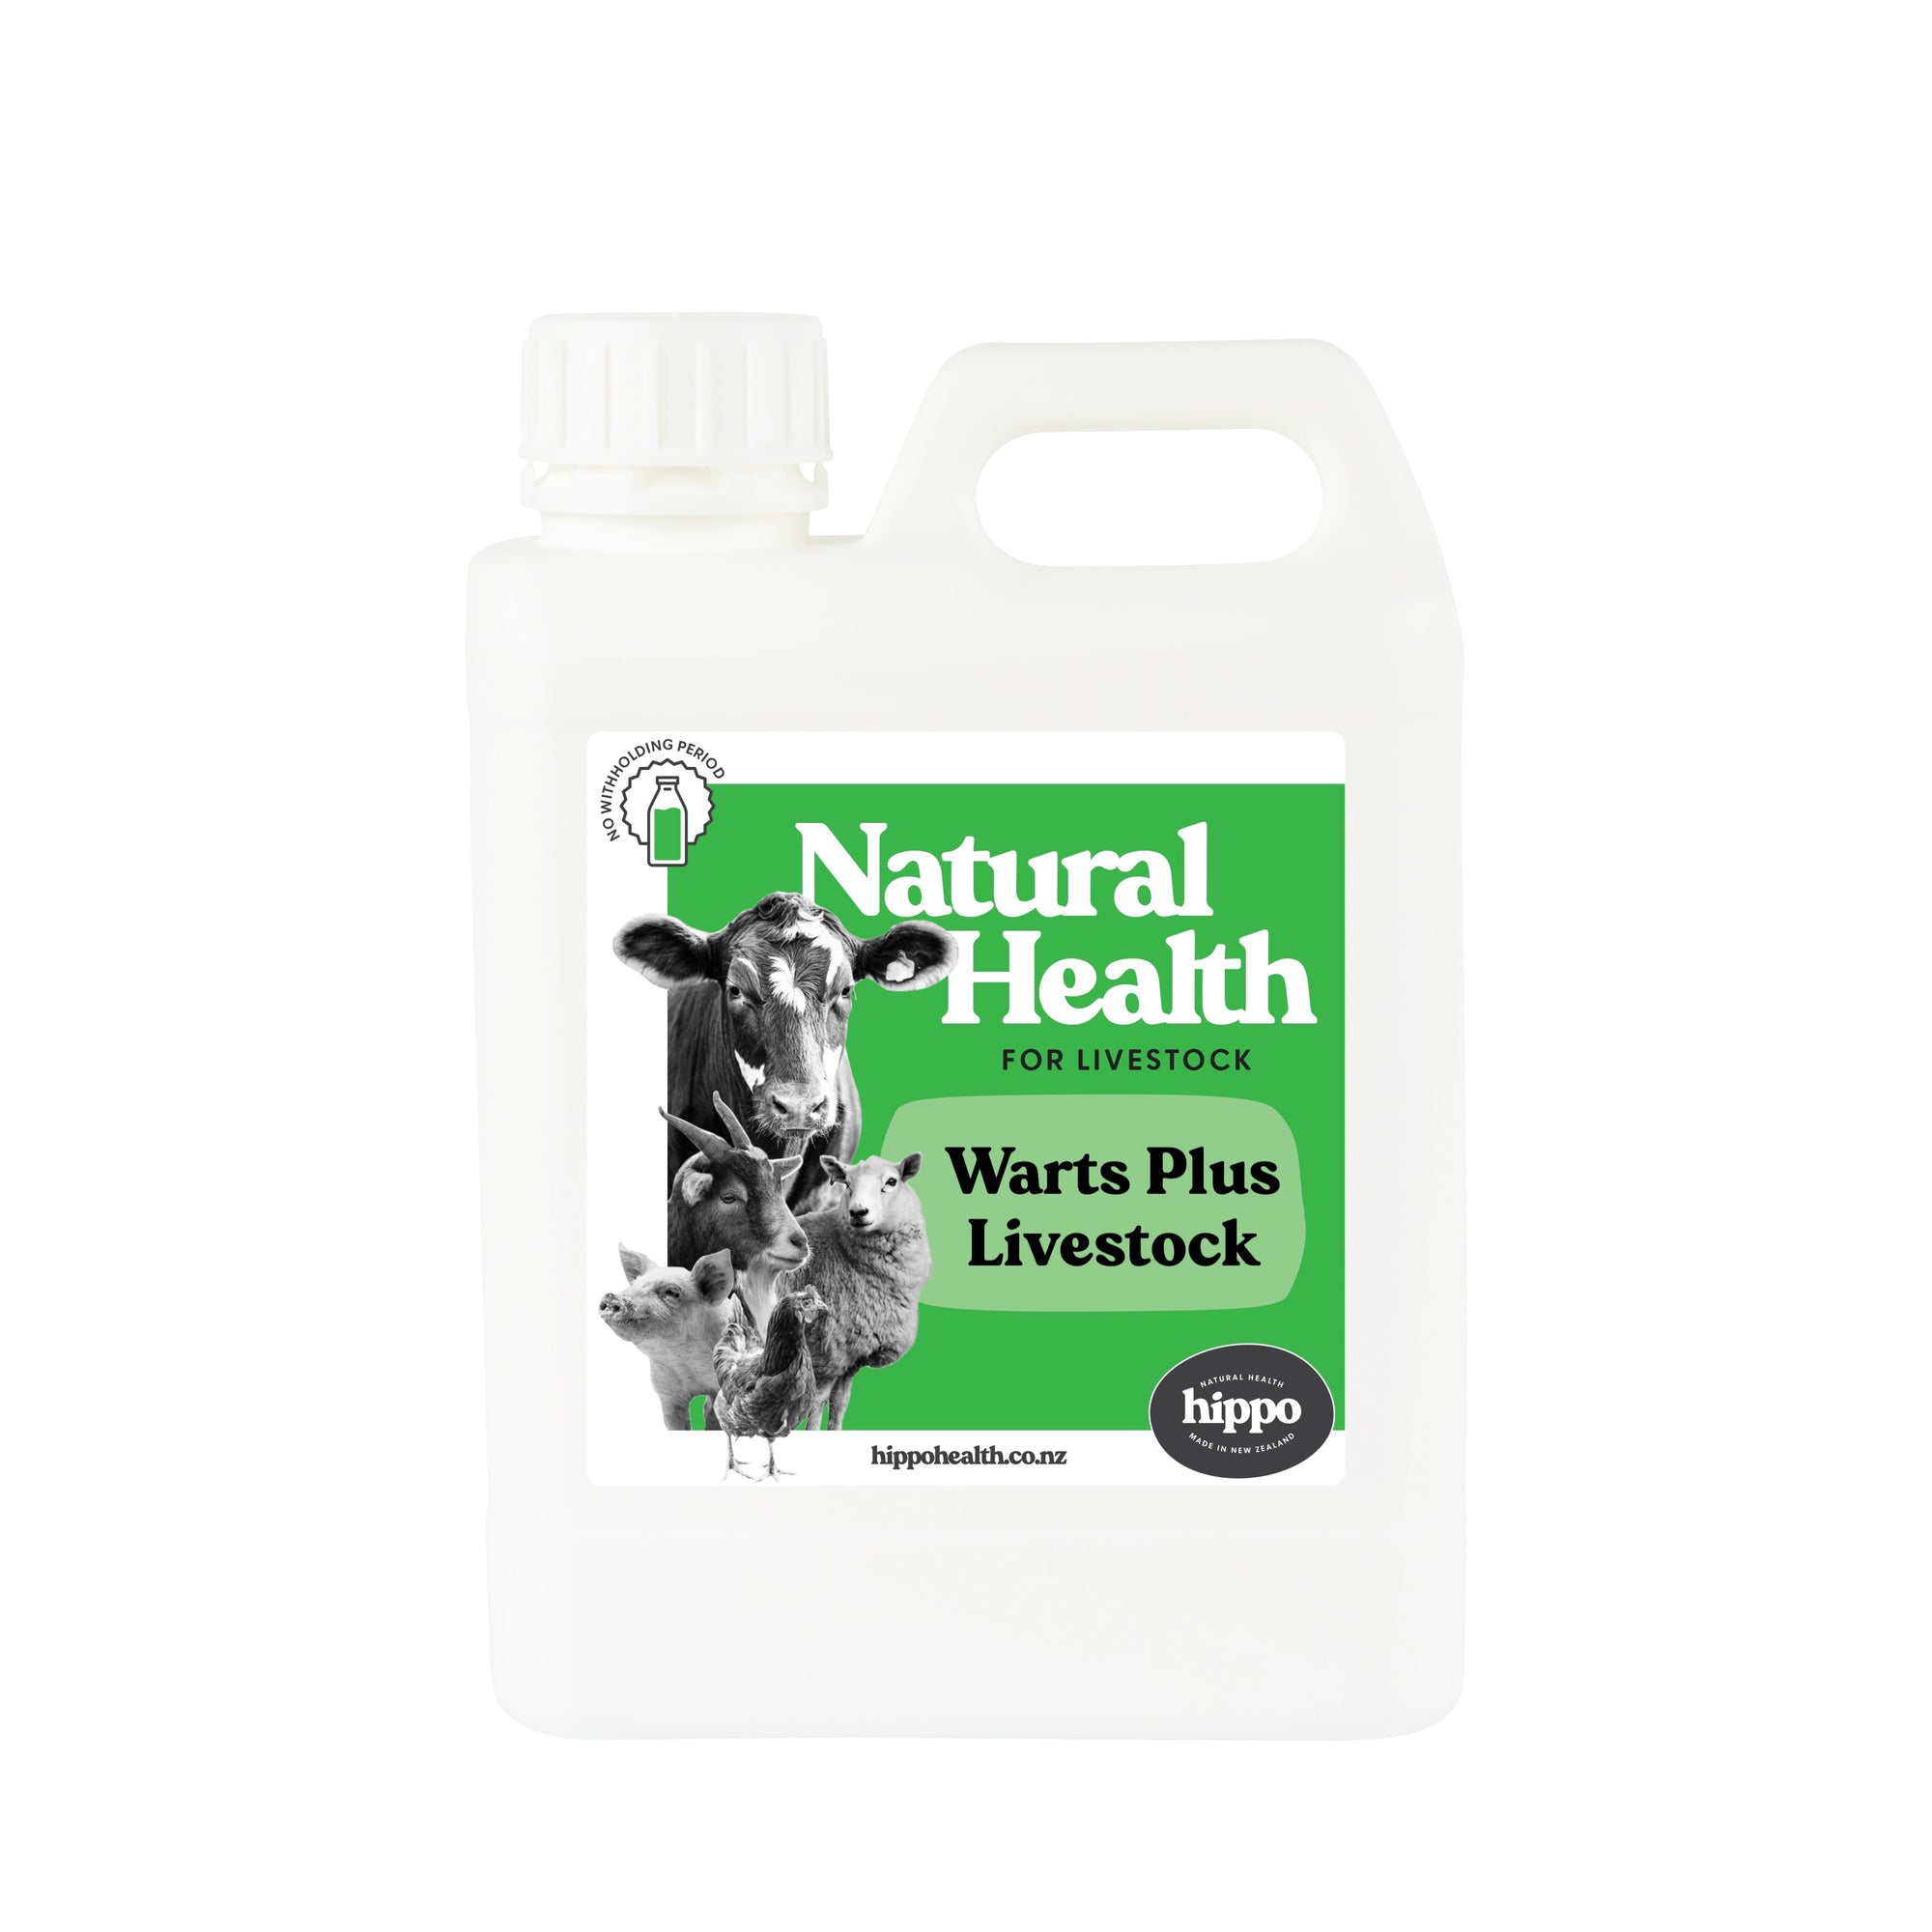 Warts Plus - Livestock for Livestock | Hippo Health